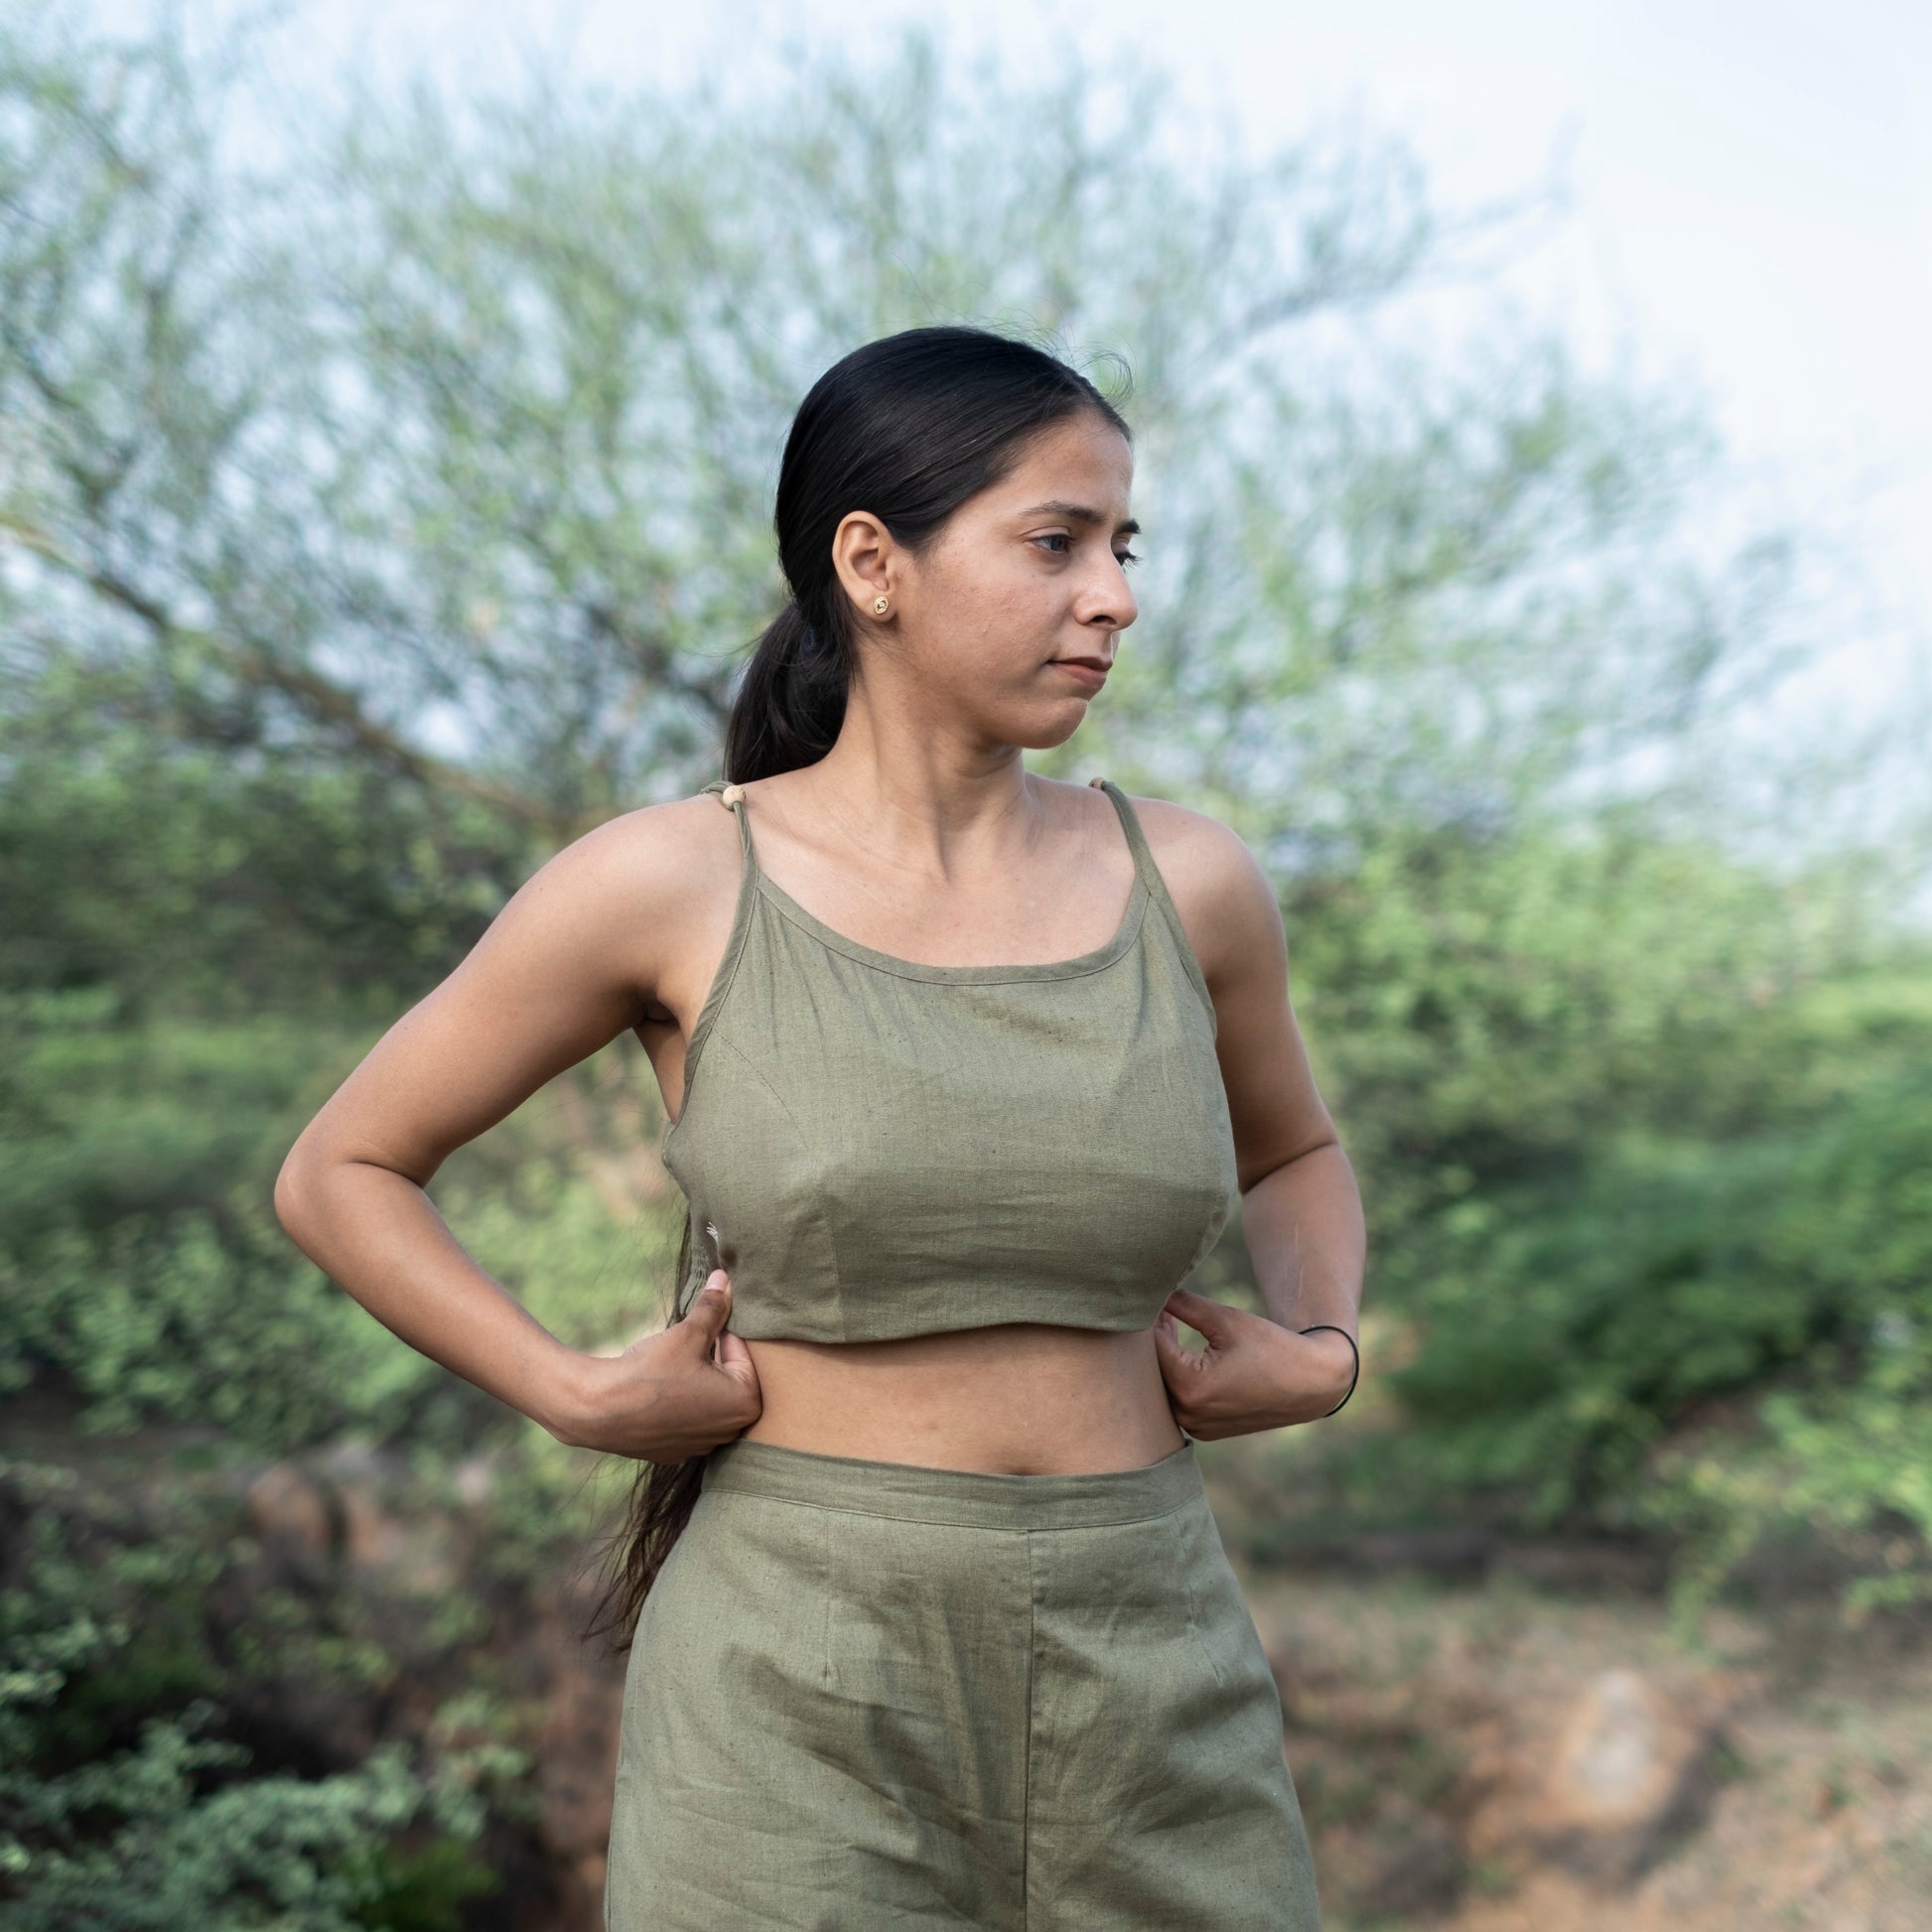 prAna Yoga Green Activewear for Women